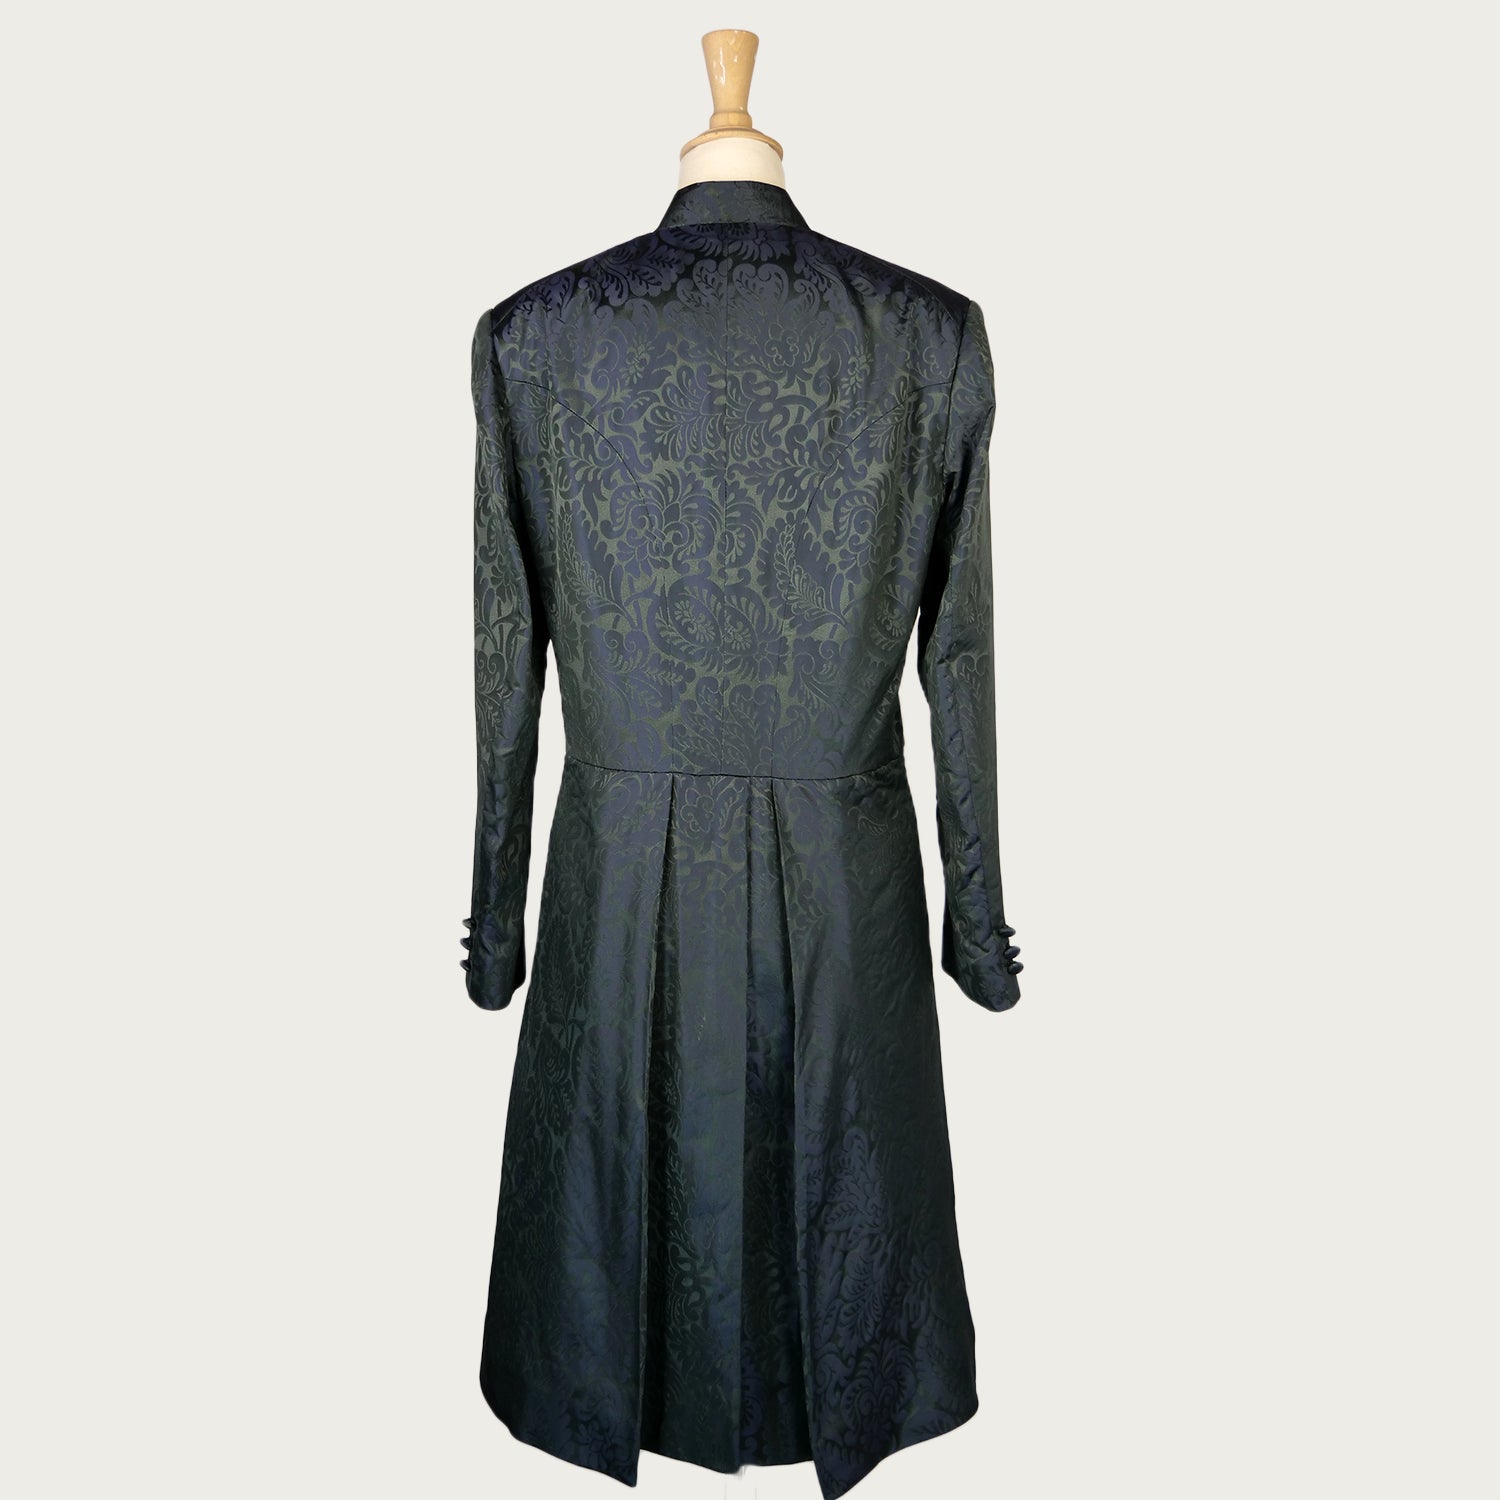 Women's Sarum Indigo 'Holbein' Silk Frock Coat Sample (size medium)